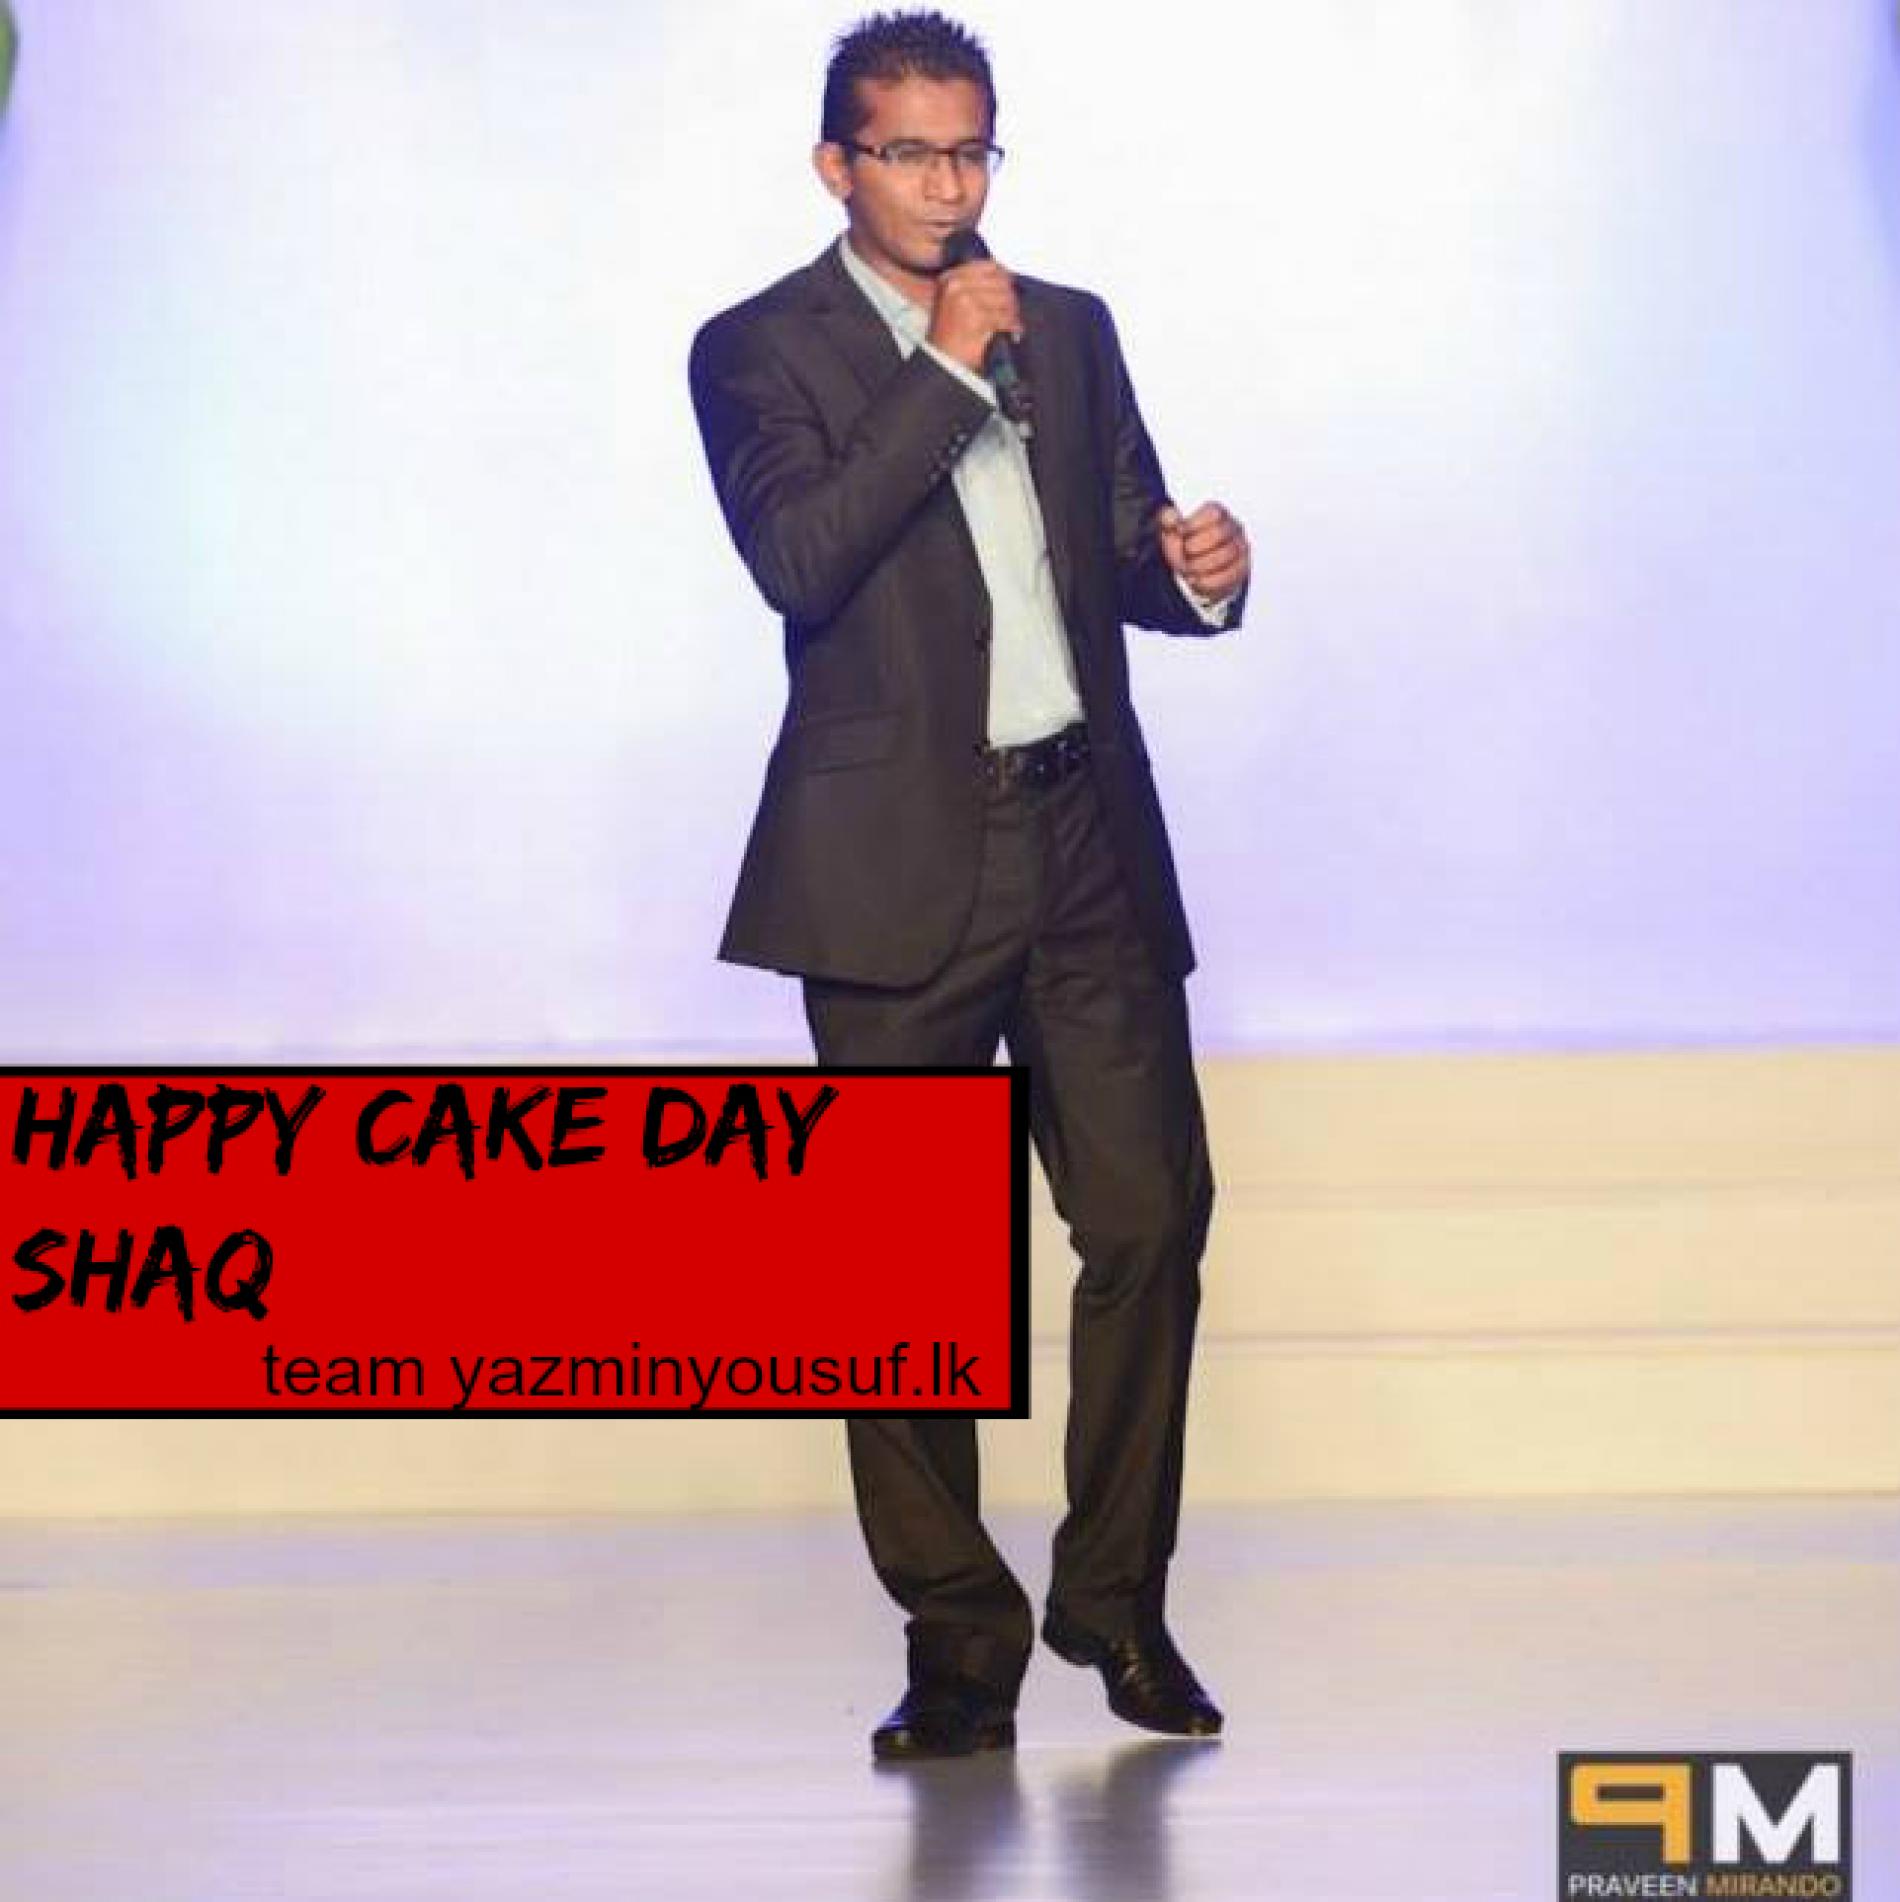 Happy Cake Day Shaq!